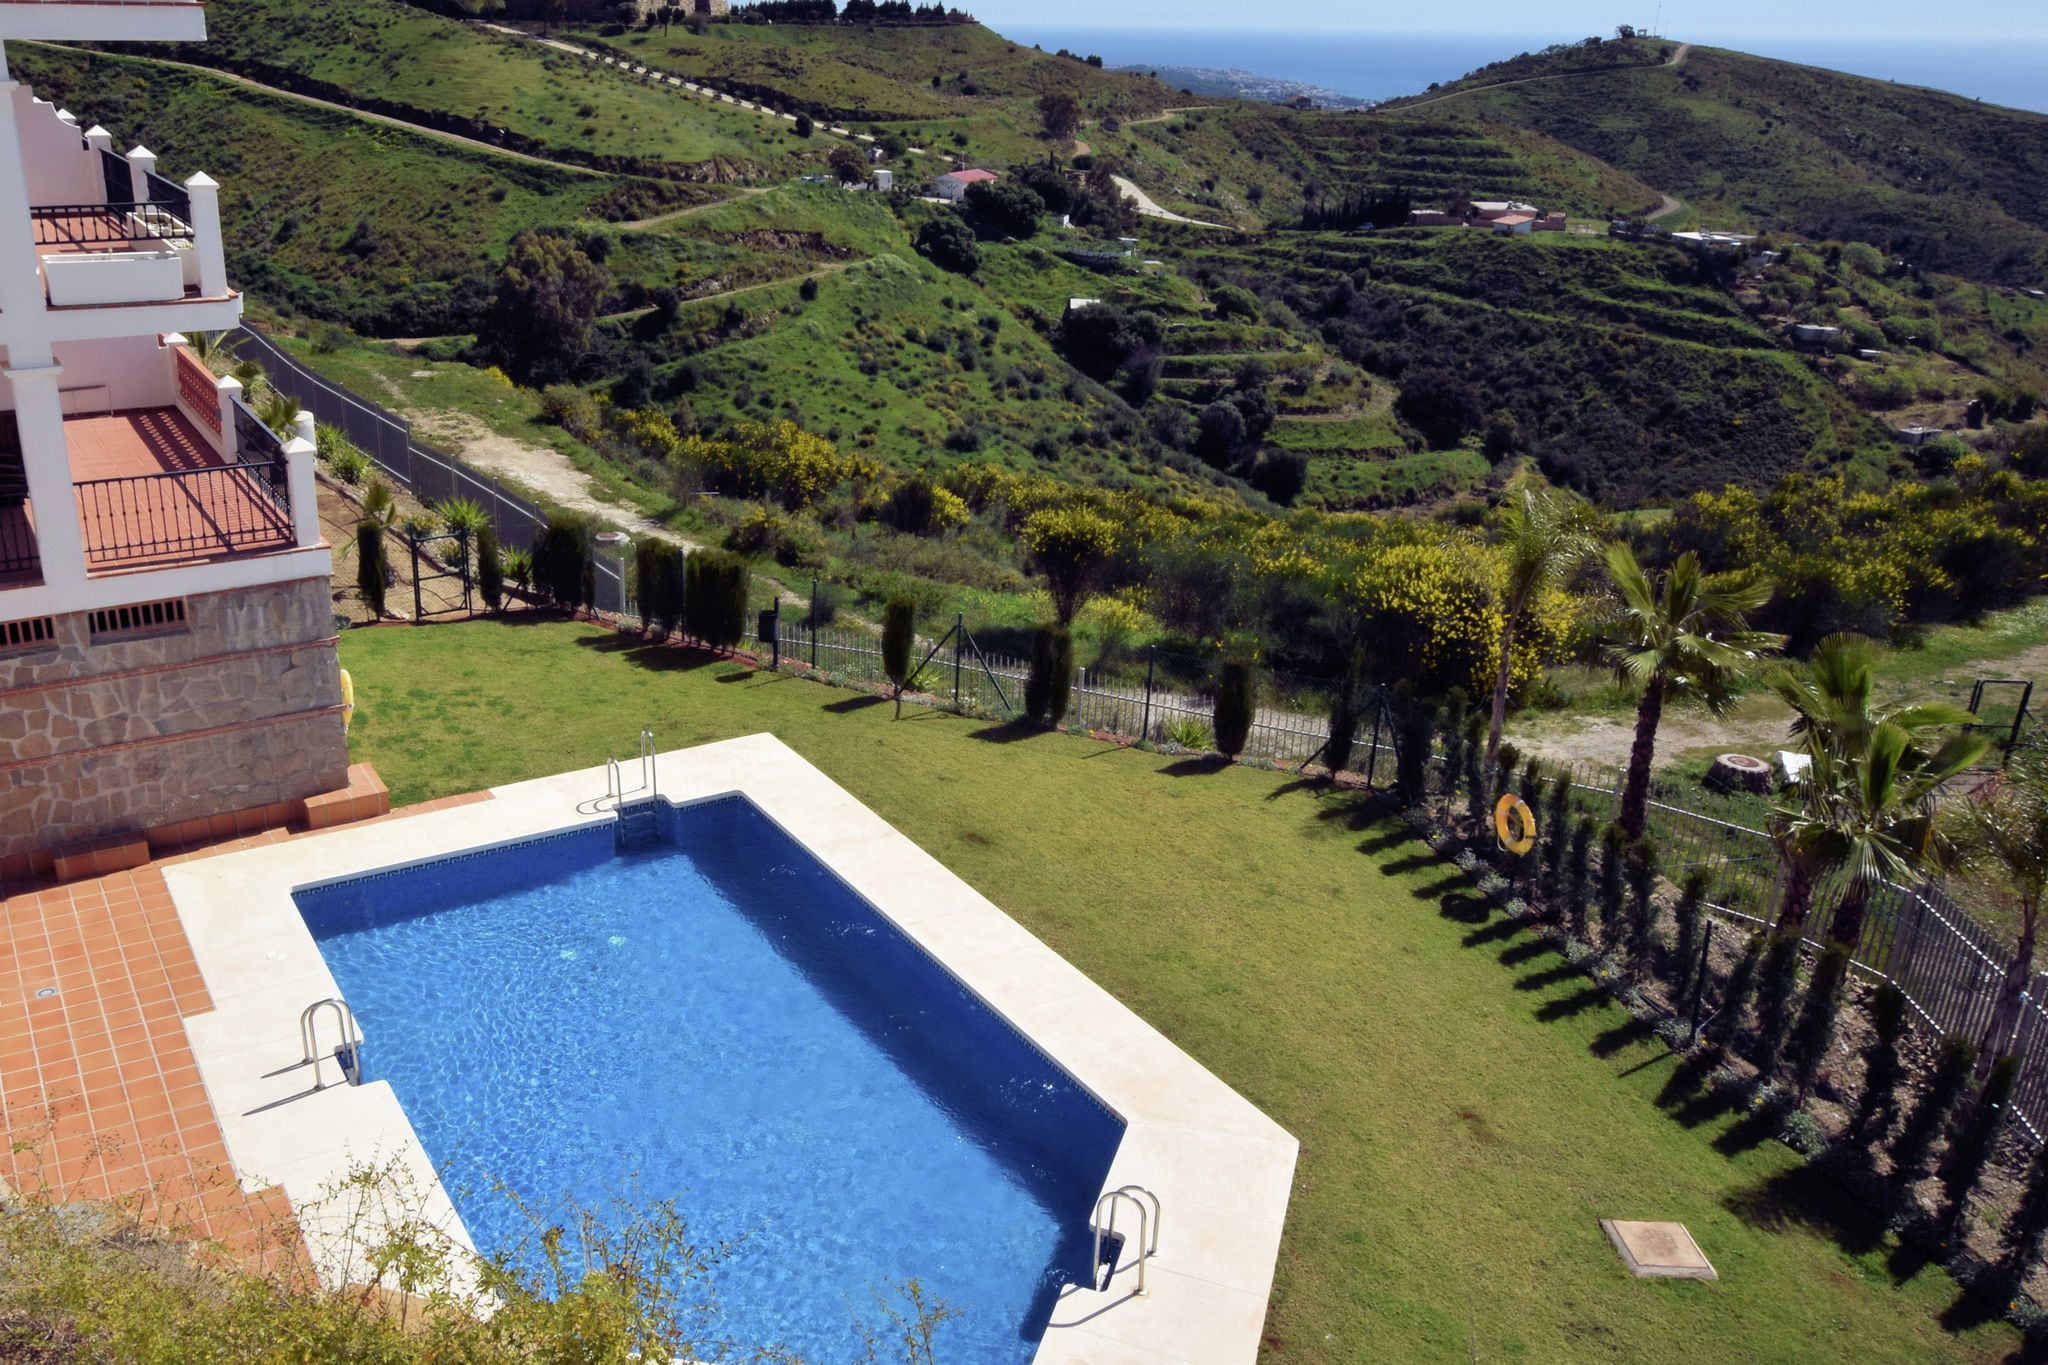 Mod. Ferienwohnung mit Gem.-Pool nahe dem Meer in Andalusien